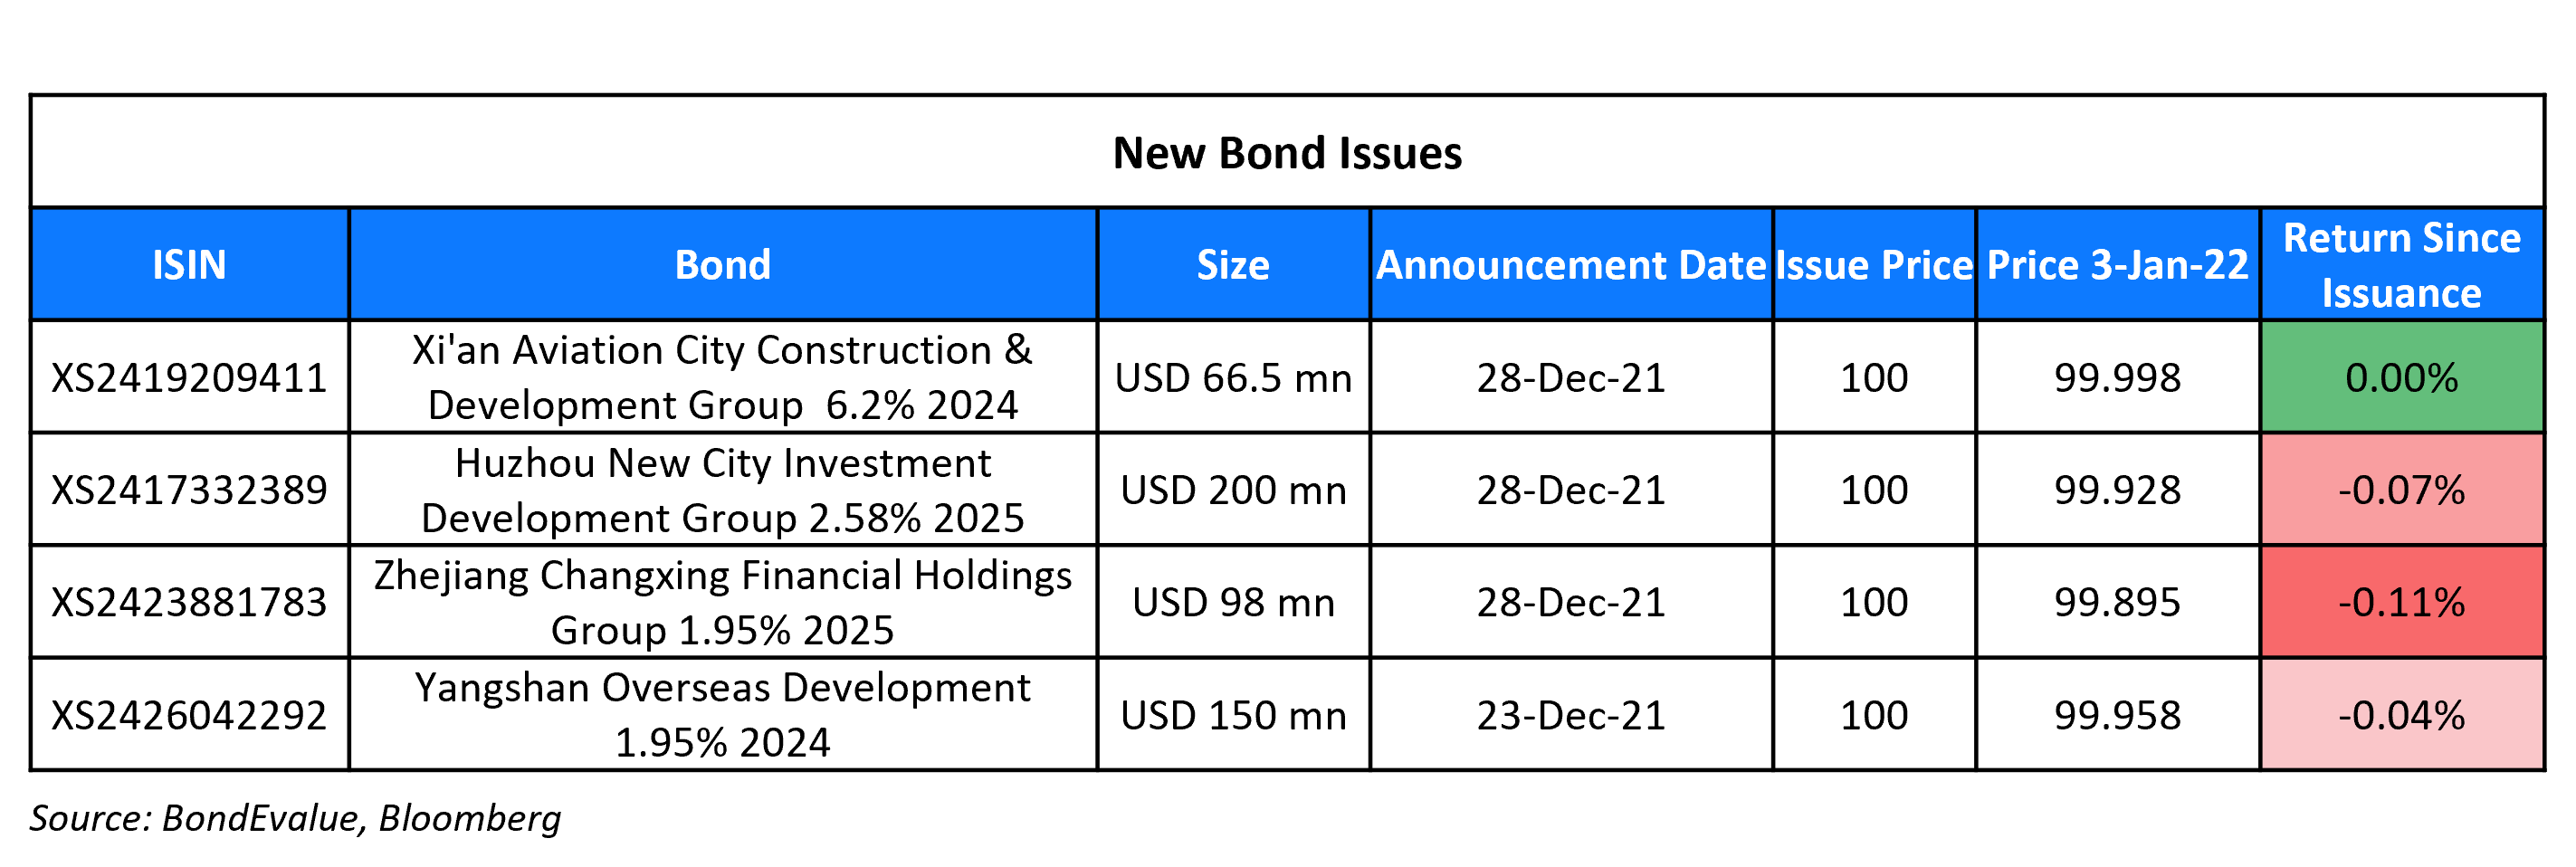 New Bond Issues 3 Jan